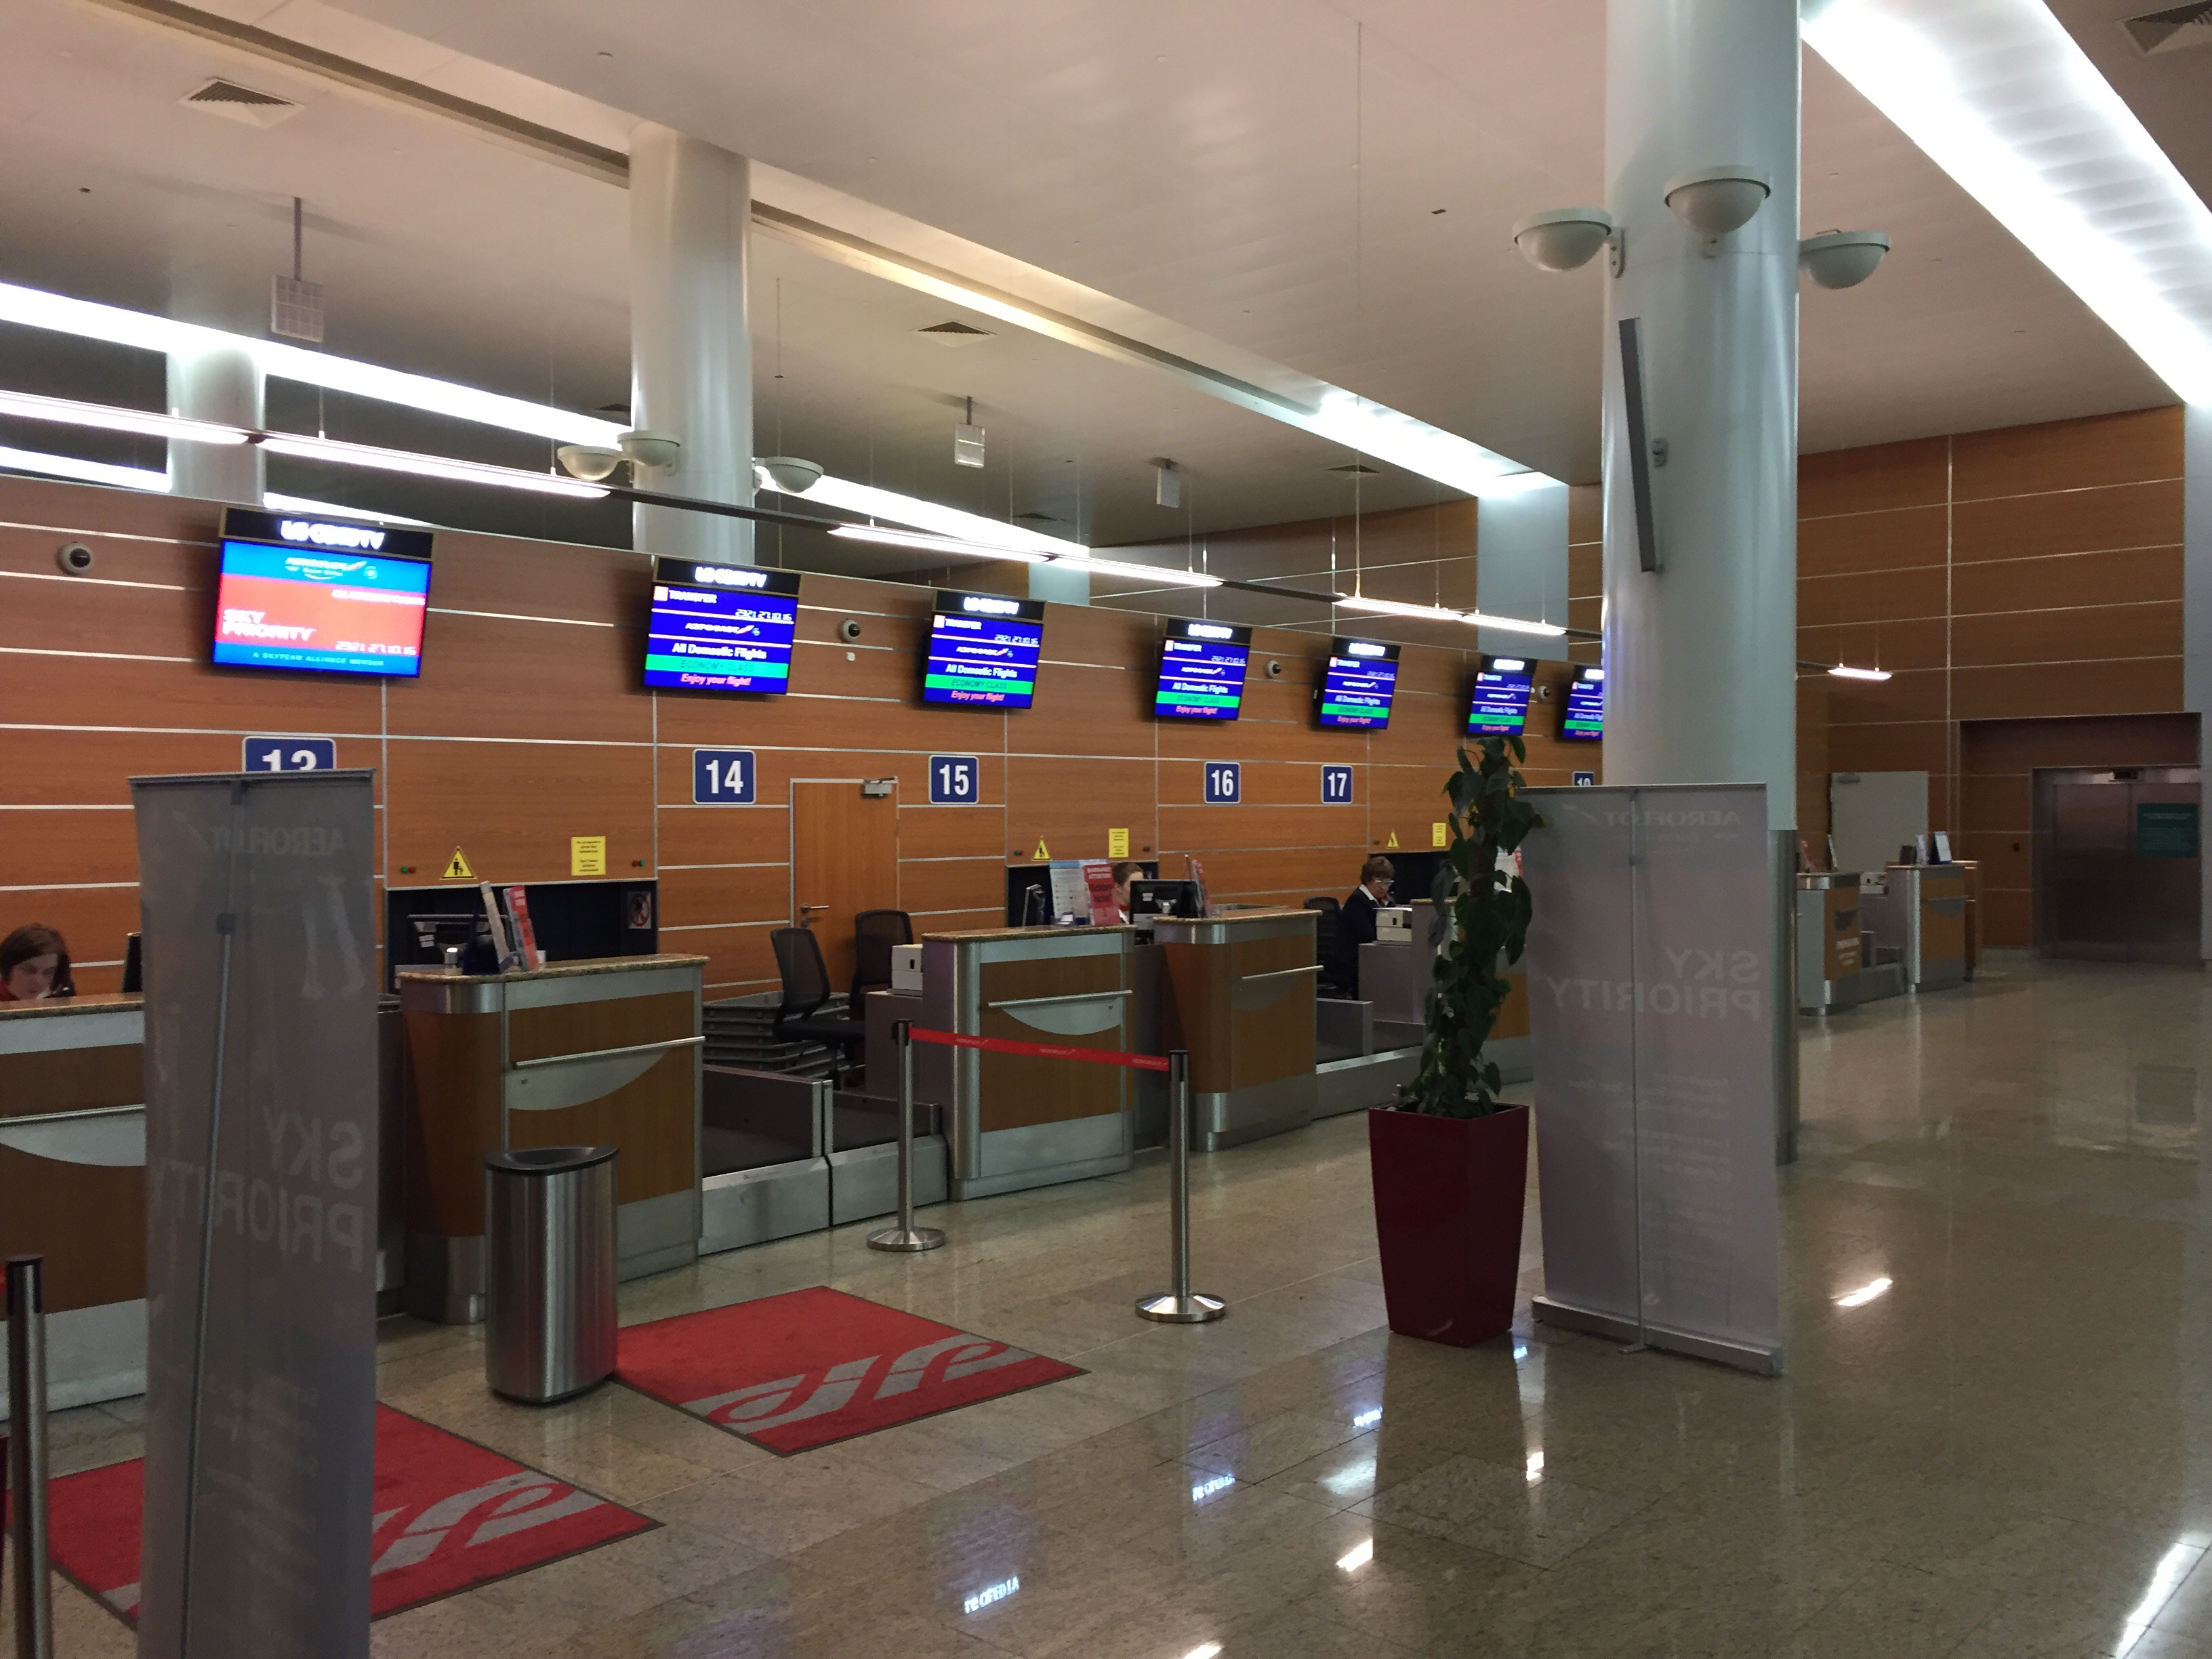 D terminal. Аэропорт Шереметьево терминал д. Шереметьево терминал д внутри. Международный аэропорт Шереметьево, терминал d, Химки. Шереметьево изнутри терминал д.